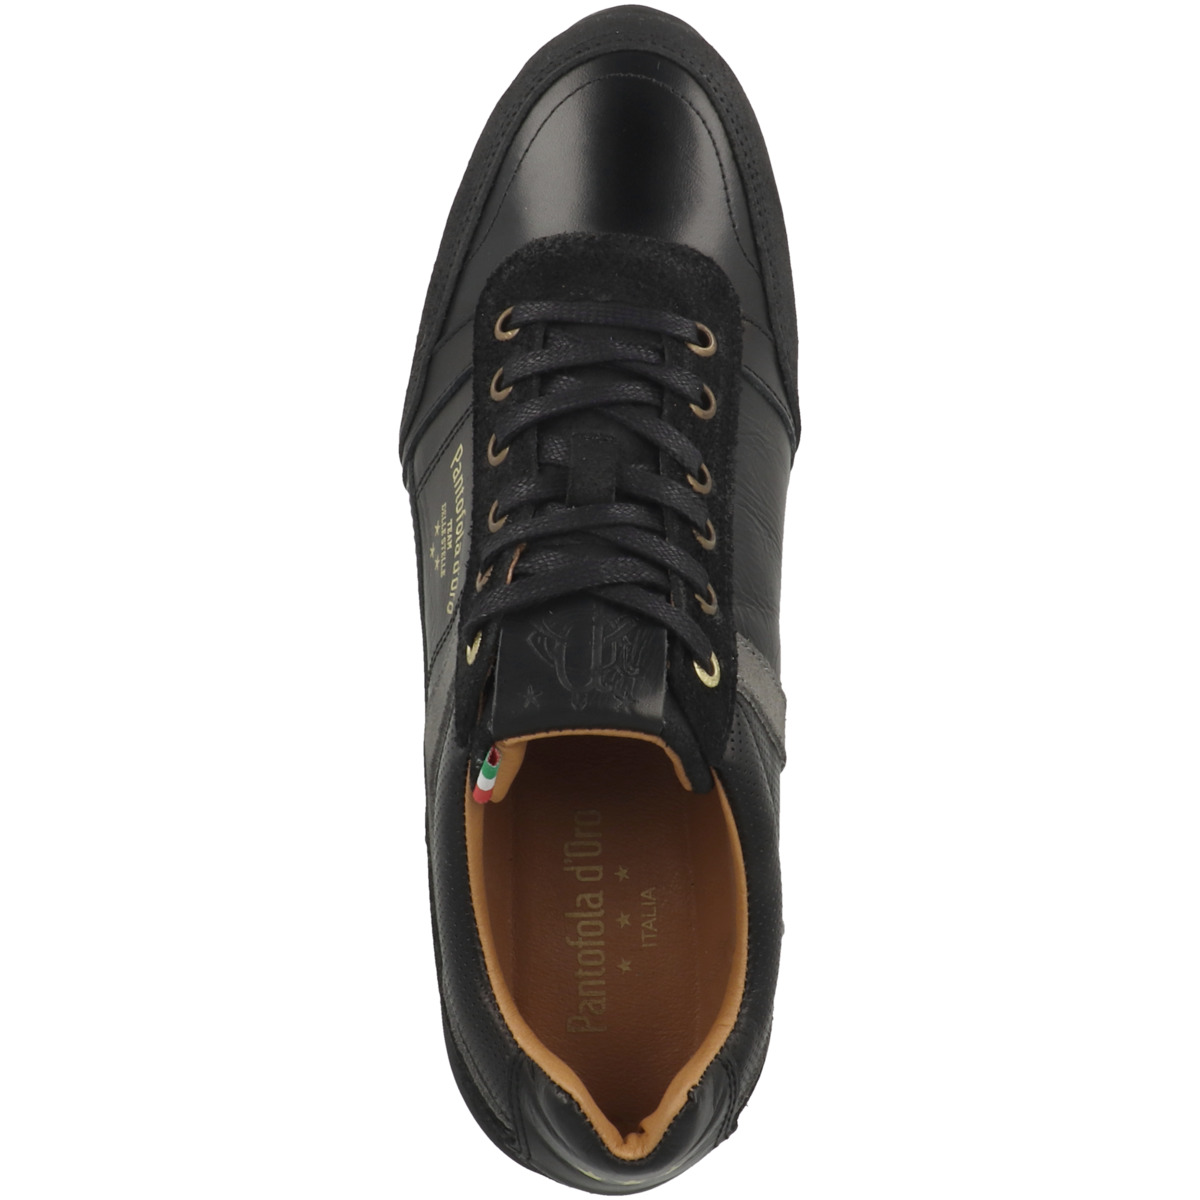 Pantofola d Oro Matera 2.0 Uomo Low Sneaker schwarz